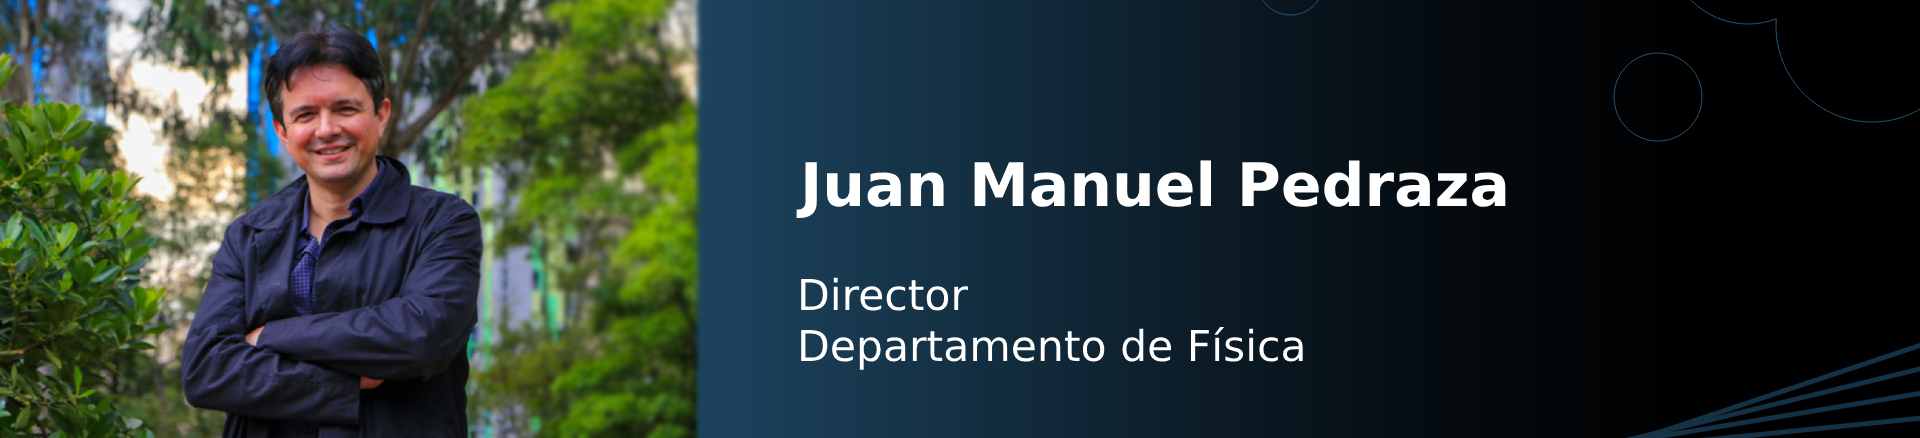 Director Departamento de Física | Juan Manuel Pedraza